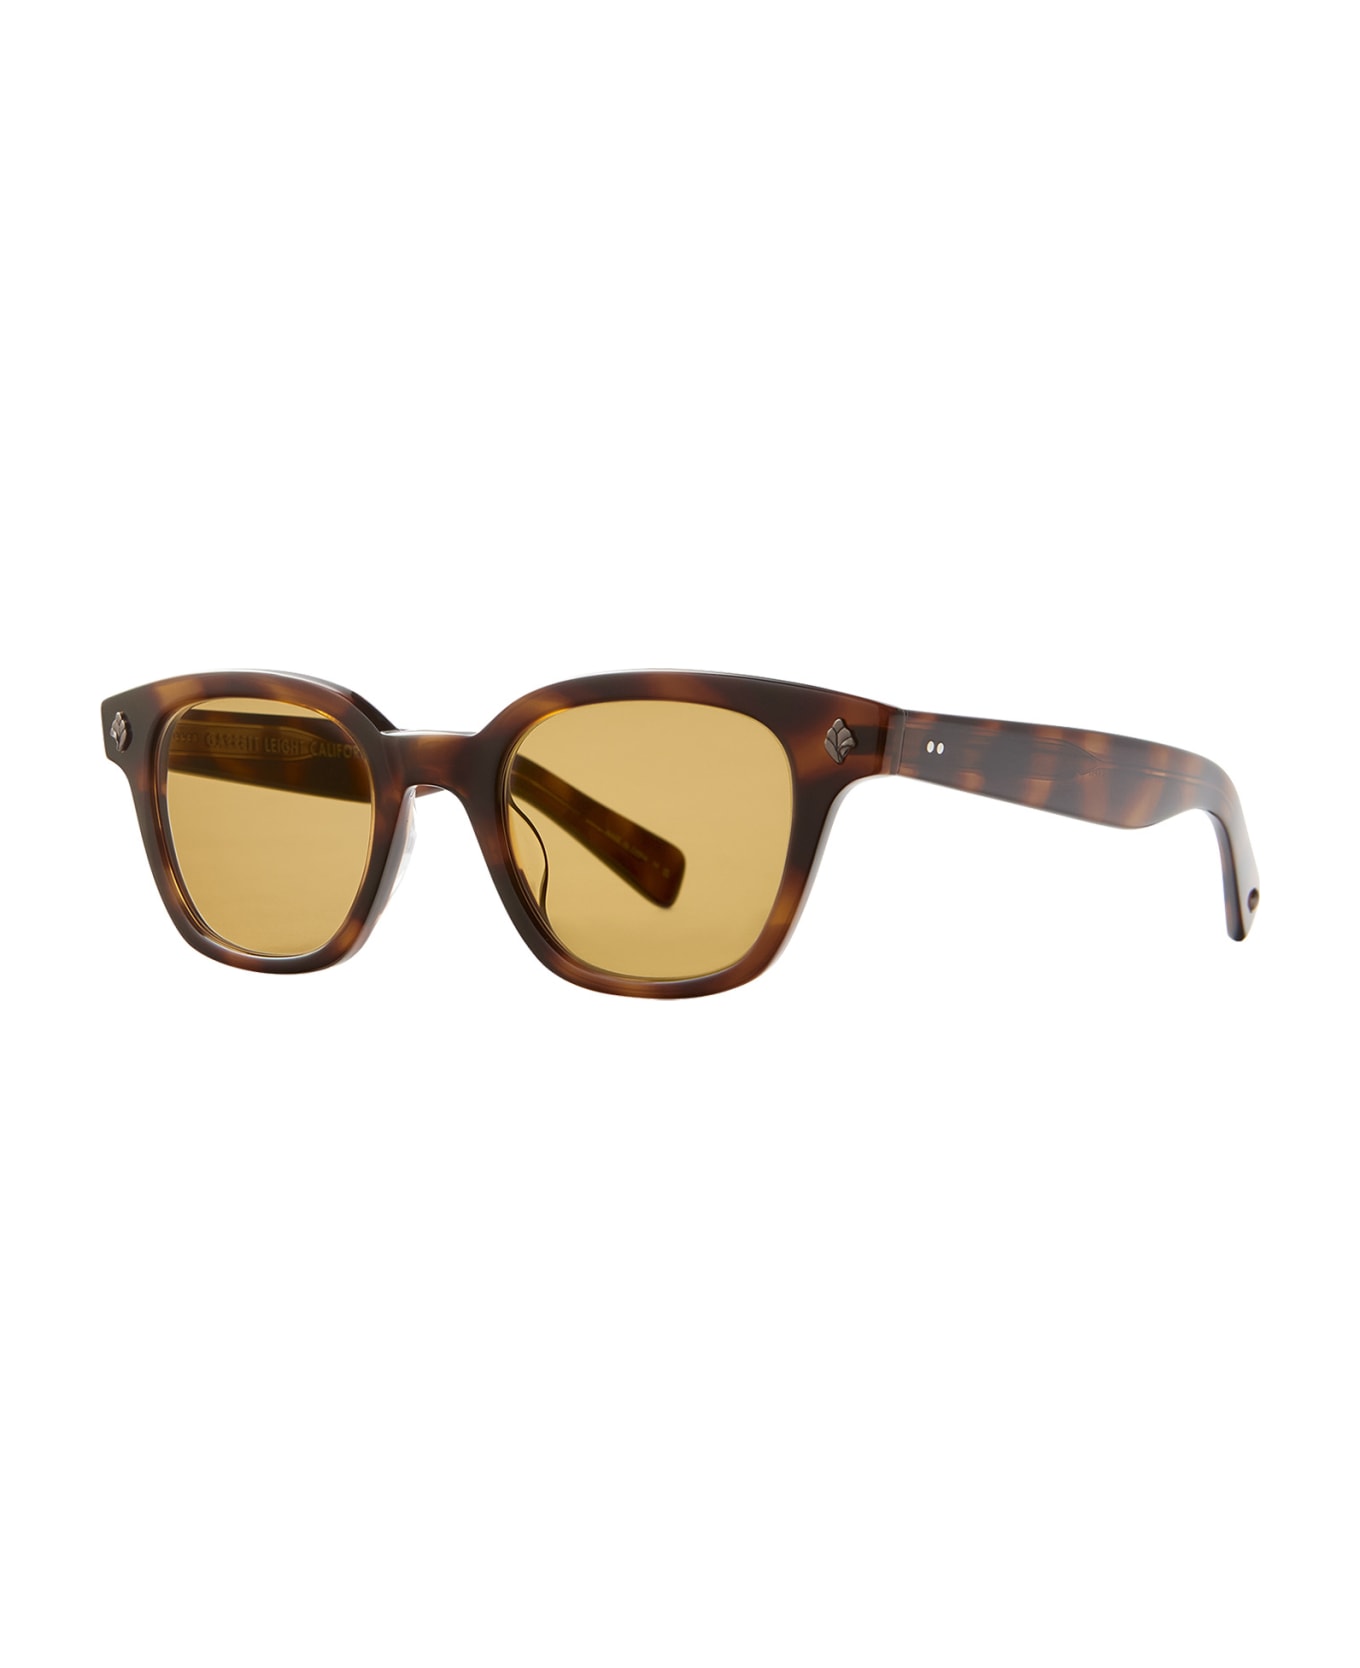 Garrett Leight Naples Sun Spotted Brown Shell Sunglasses - Spotted Brown Shell